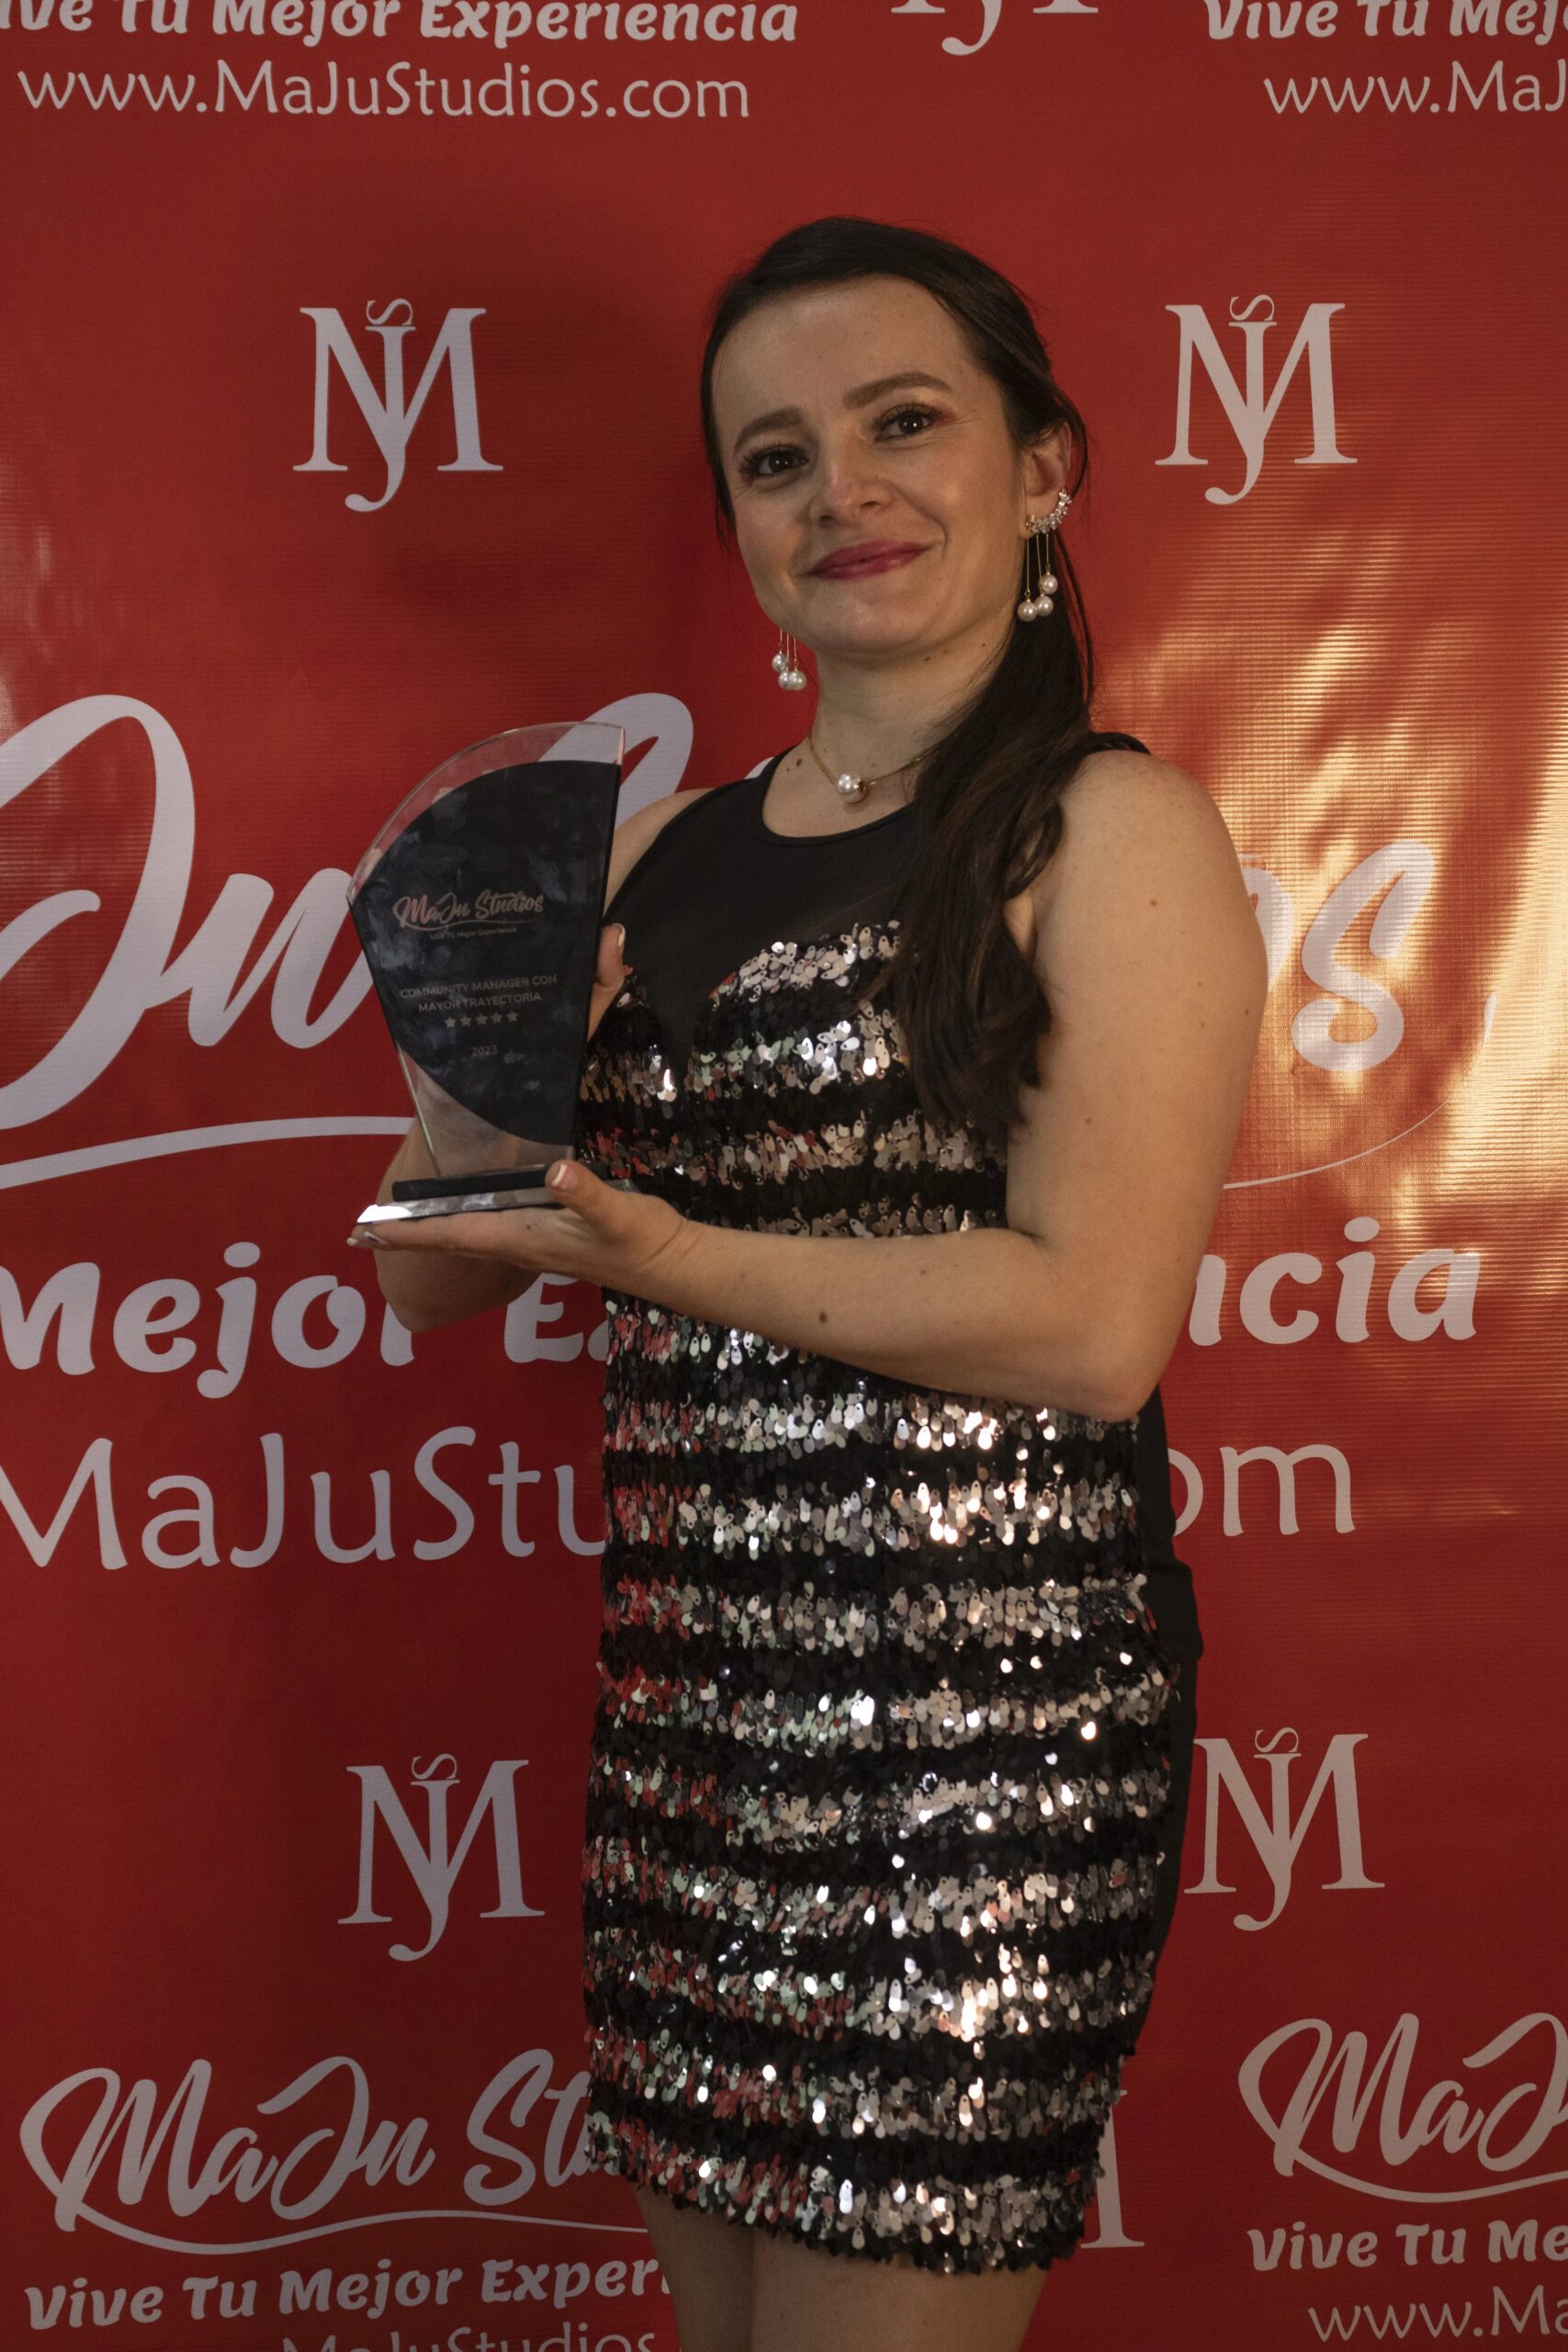 Premio Community Manager con Mayor Trayectoria